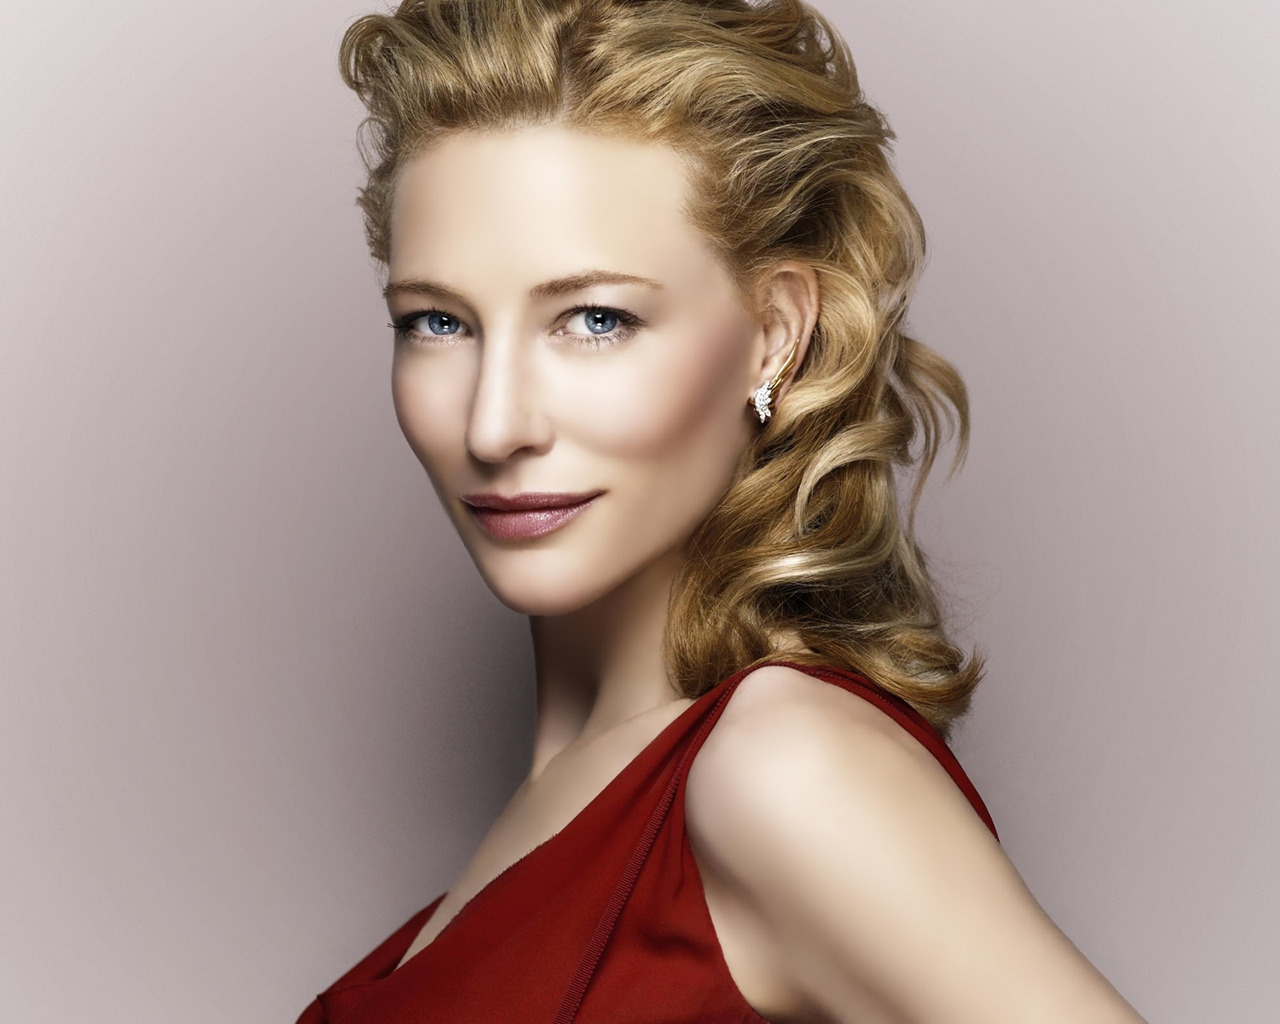 Cate Blanchett for 1280 x 1024 resolution